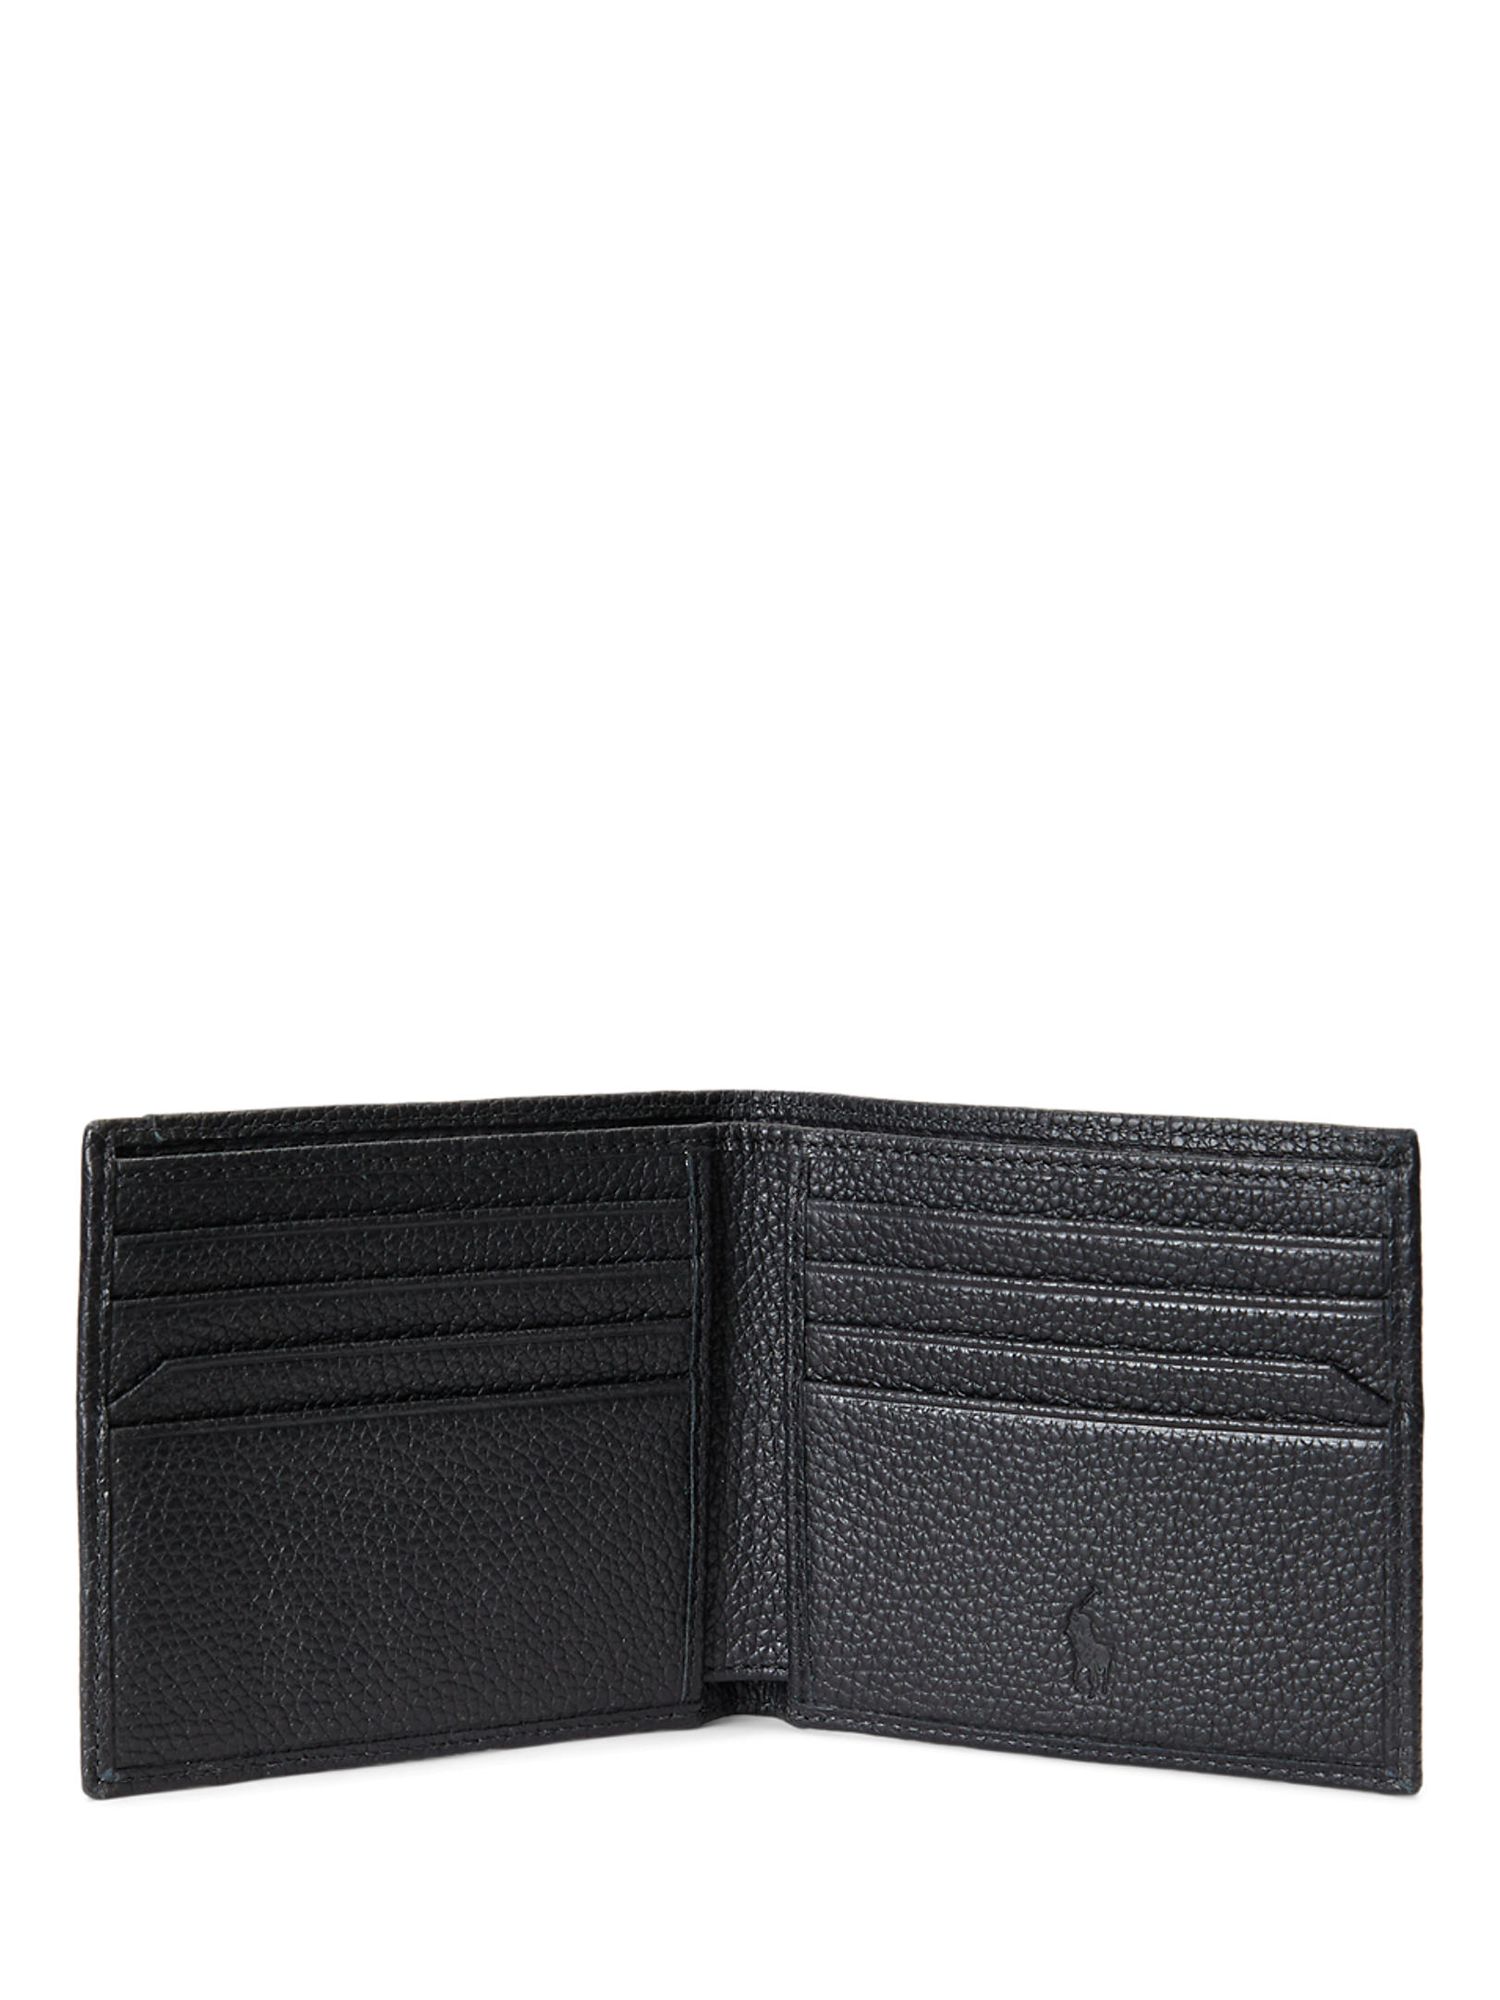 Polo Ralph Lauren Pebbled Leather Wallet, Black at John Lewis & Partners